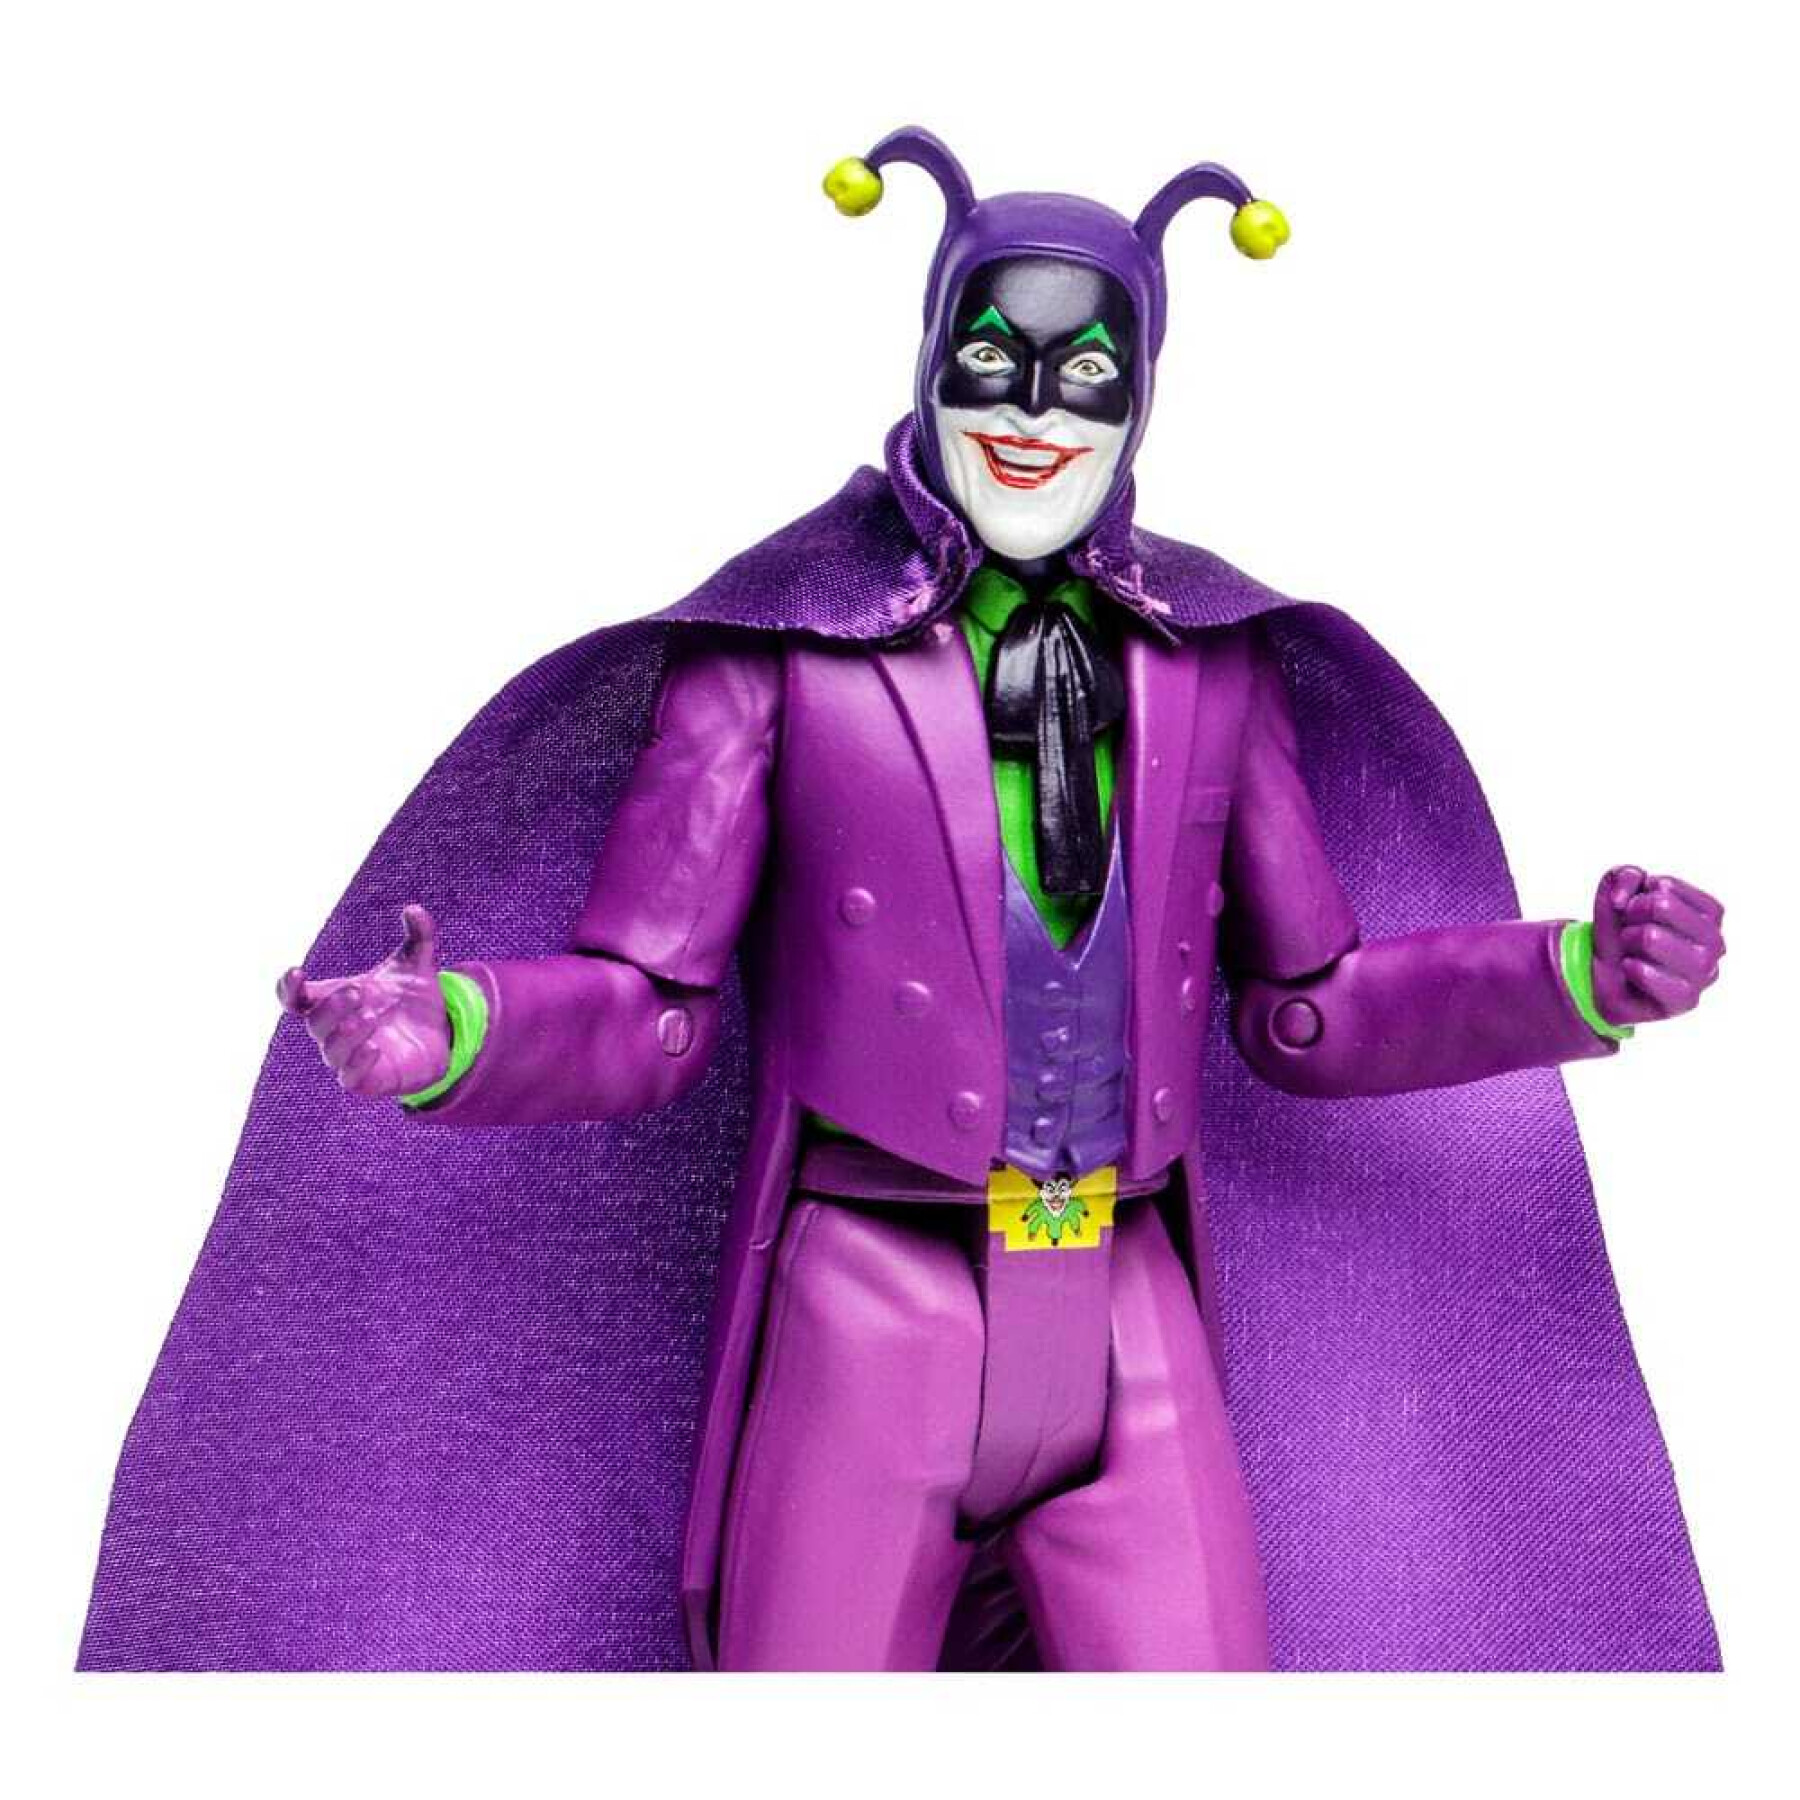 Beeldje McFarlane Toys DC Retro Batman 66 The Joker